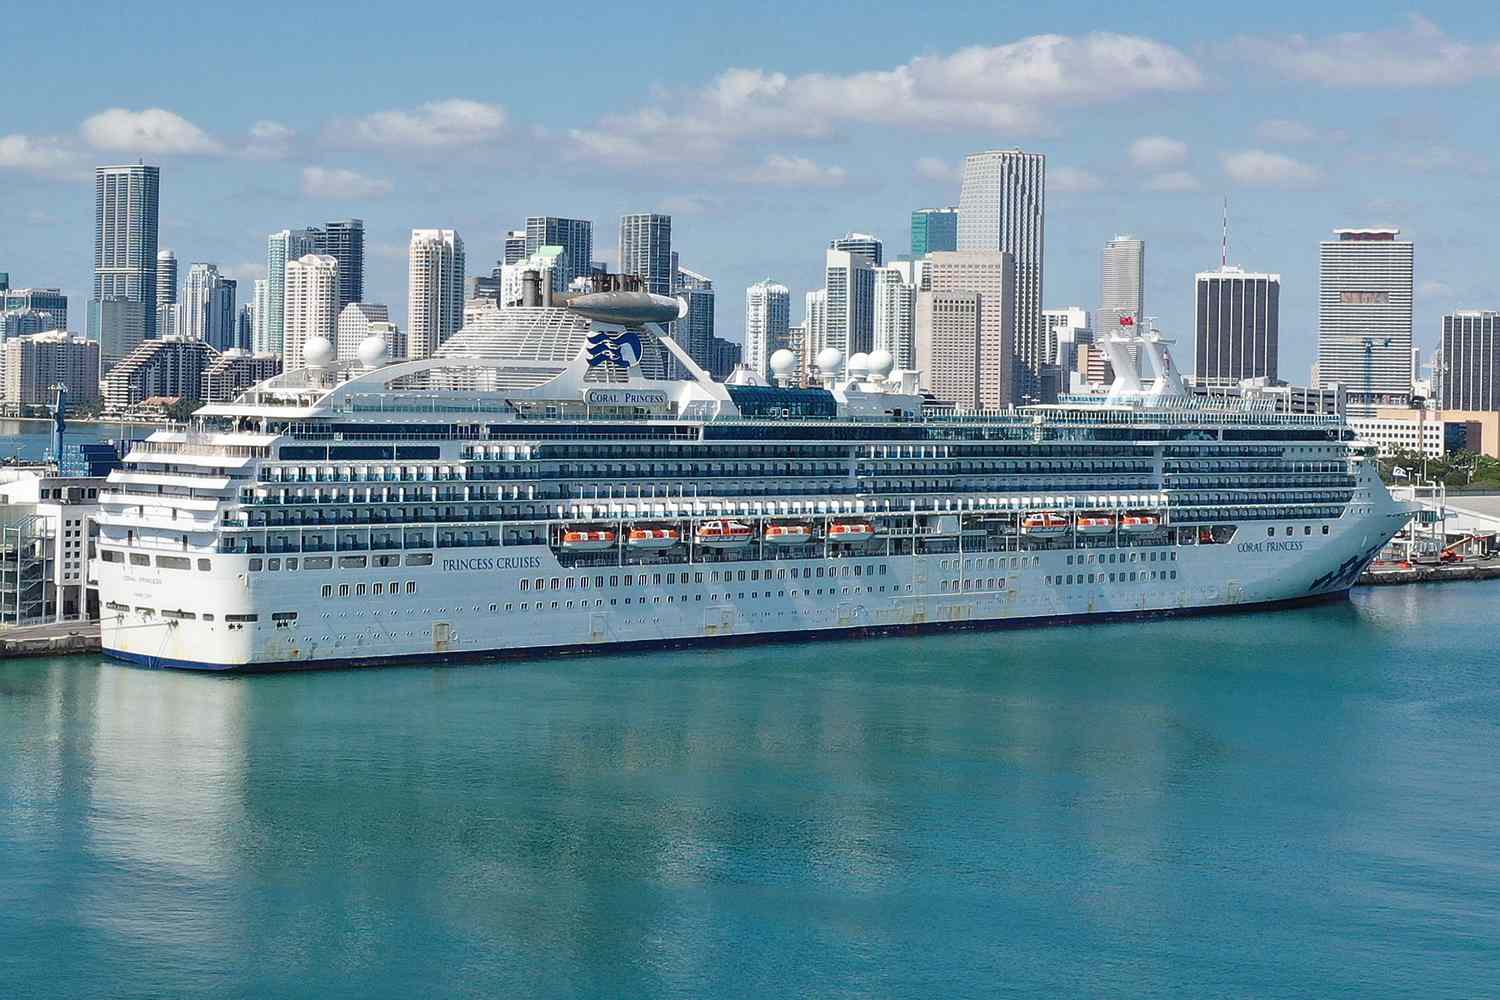 drone shows the cruise ship Coral Princess